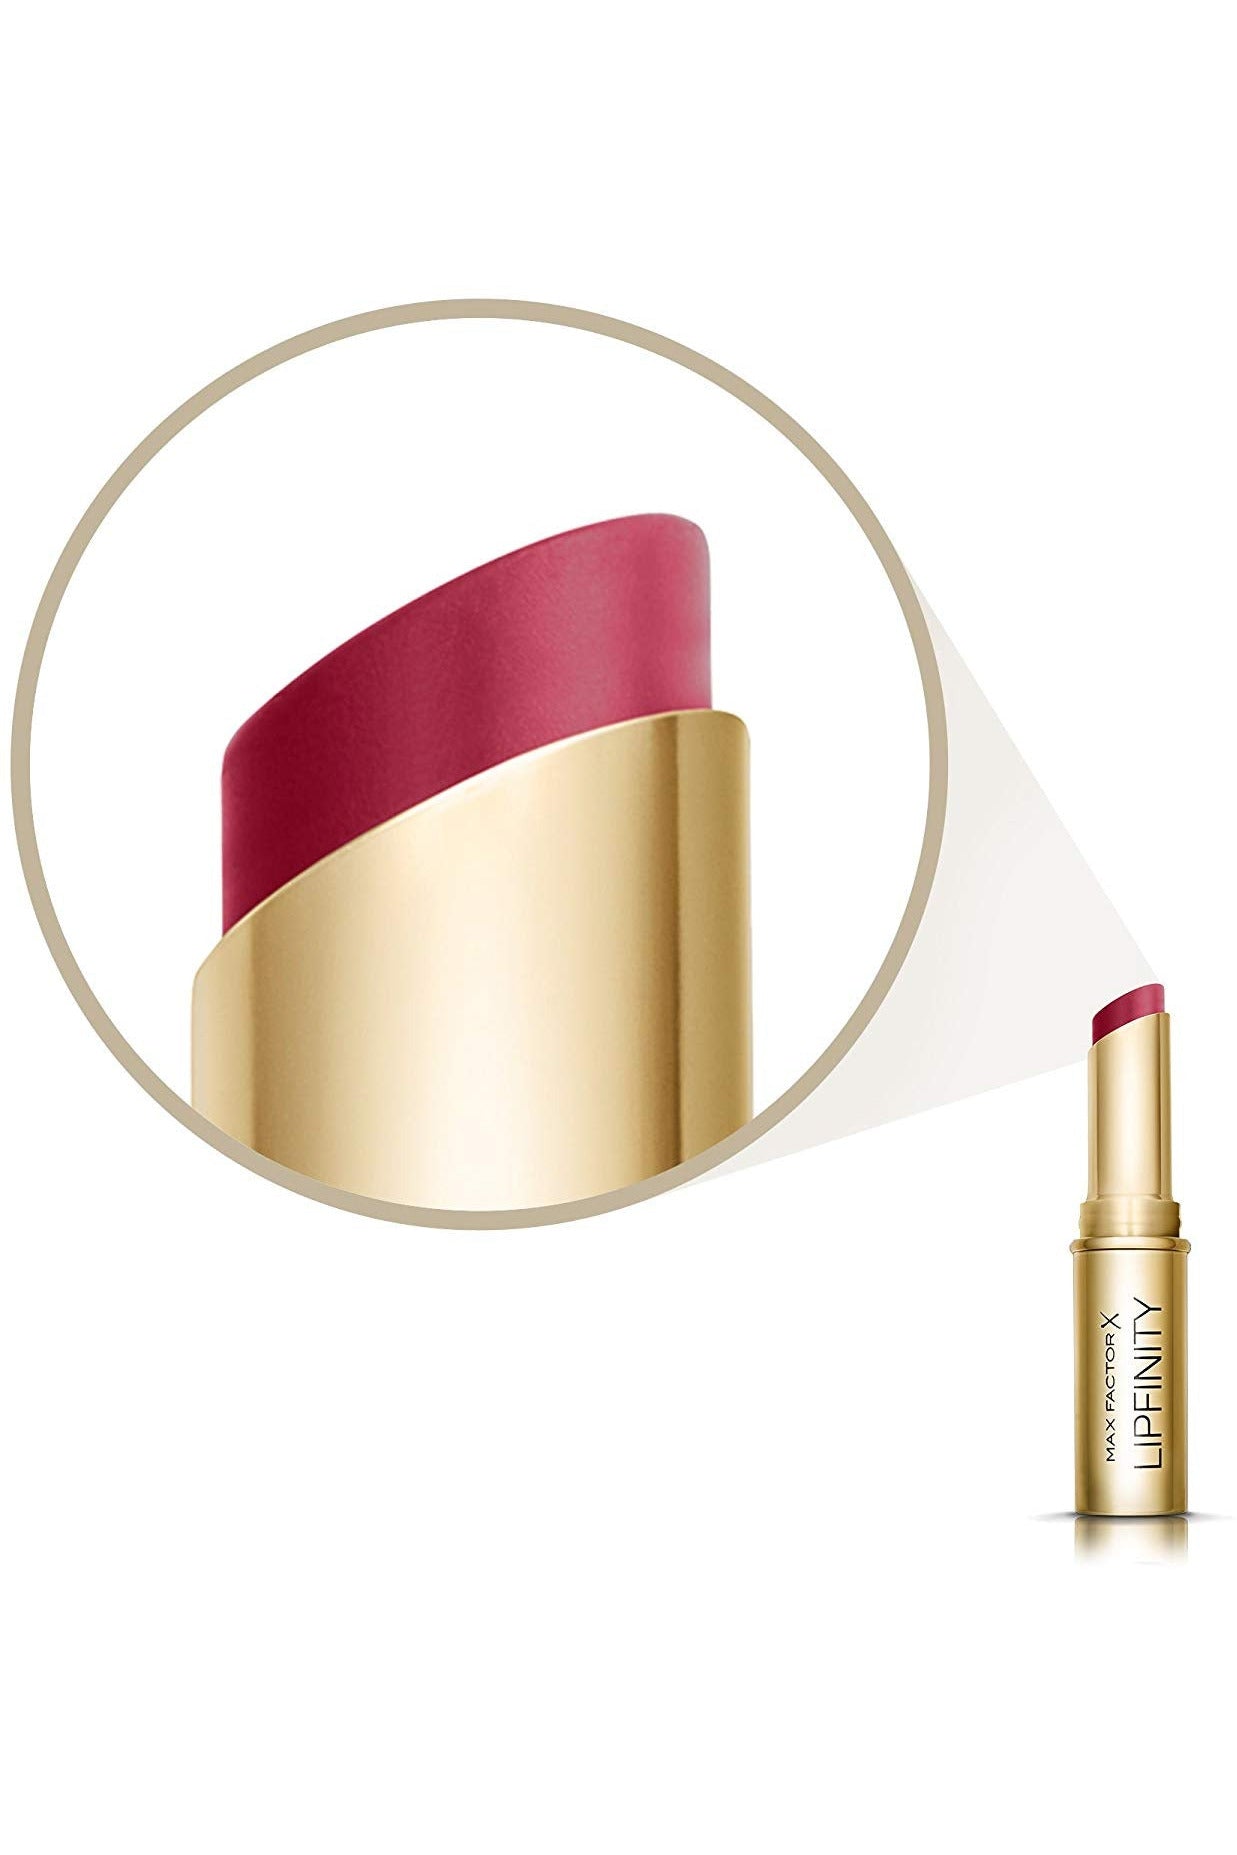 Buy Max Factor Lipfinity Lipstick - 65 So Luxuriant in Pakistan